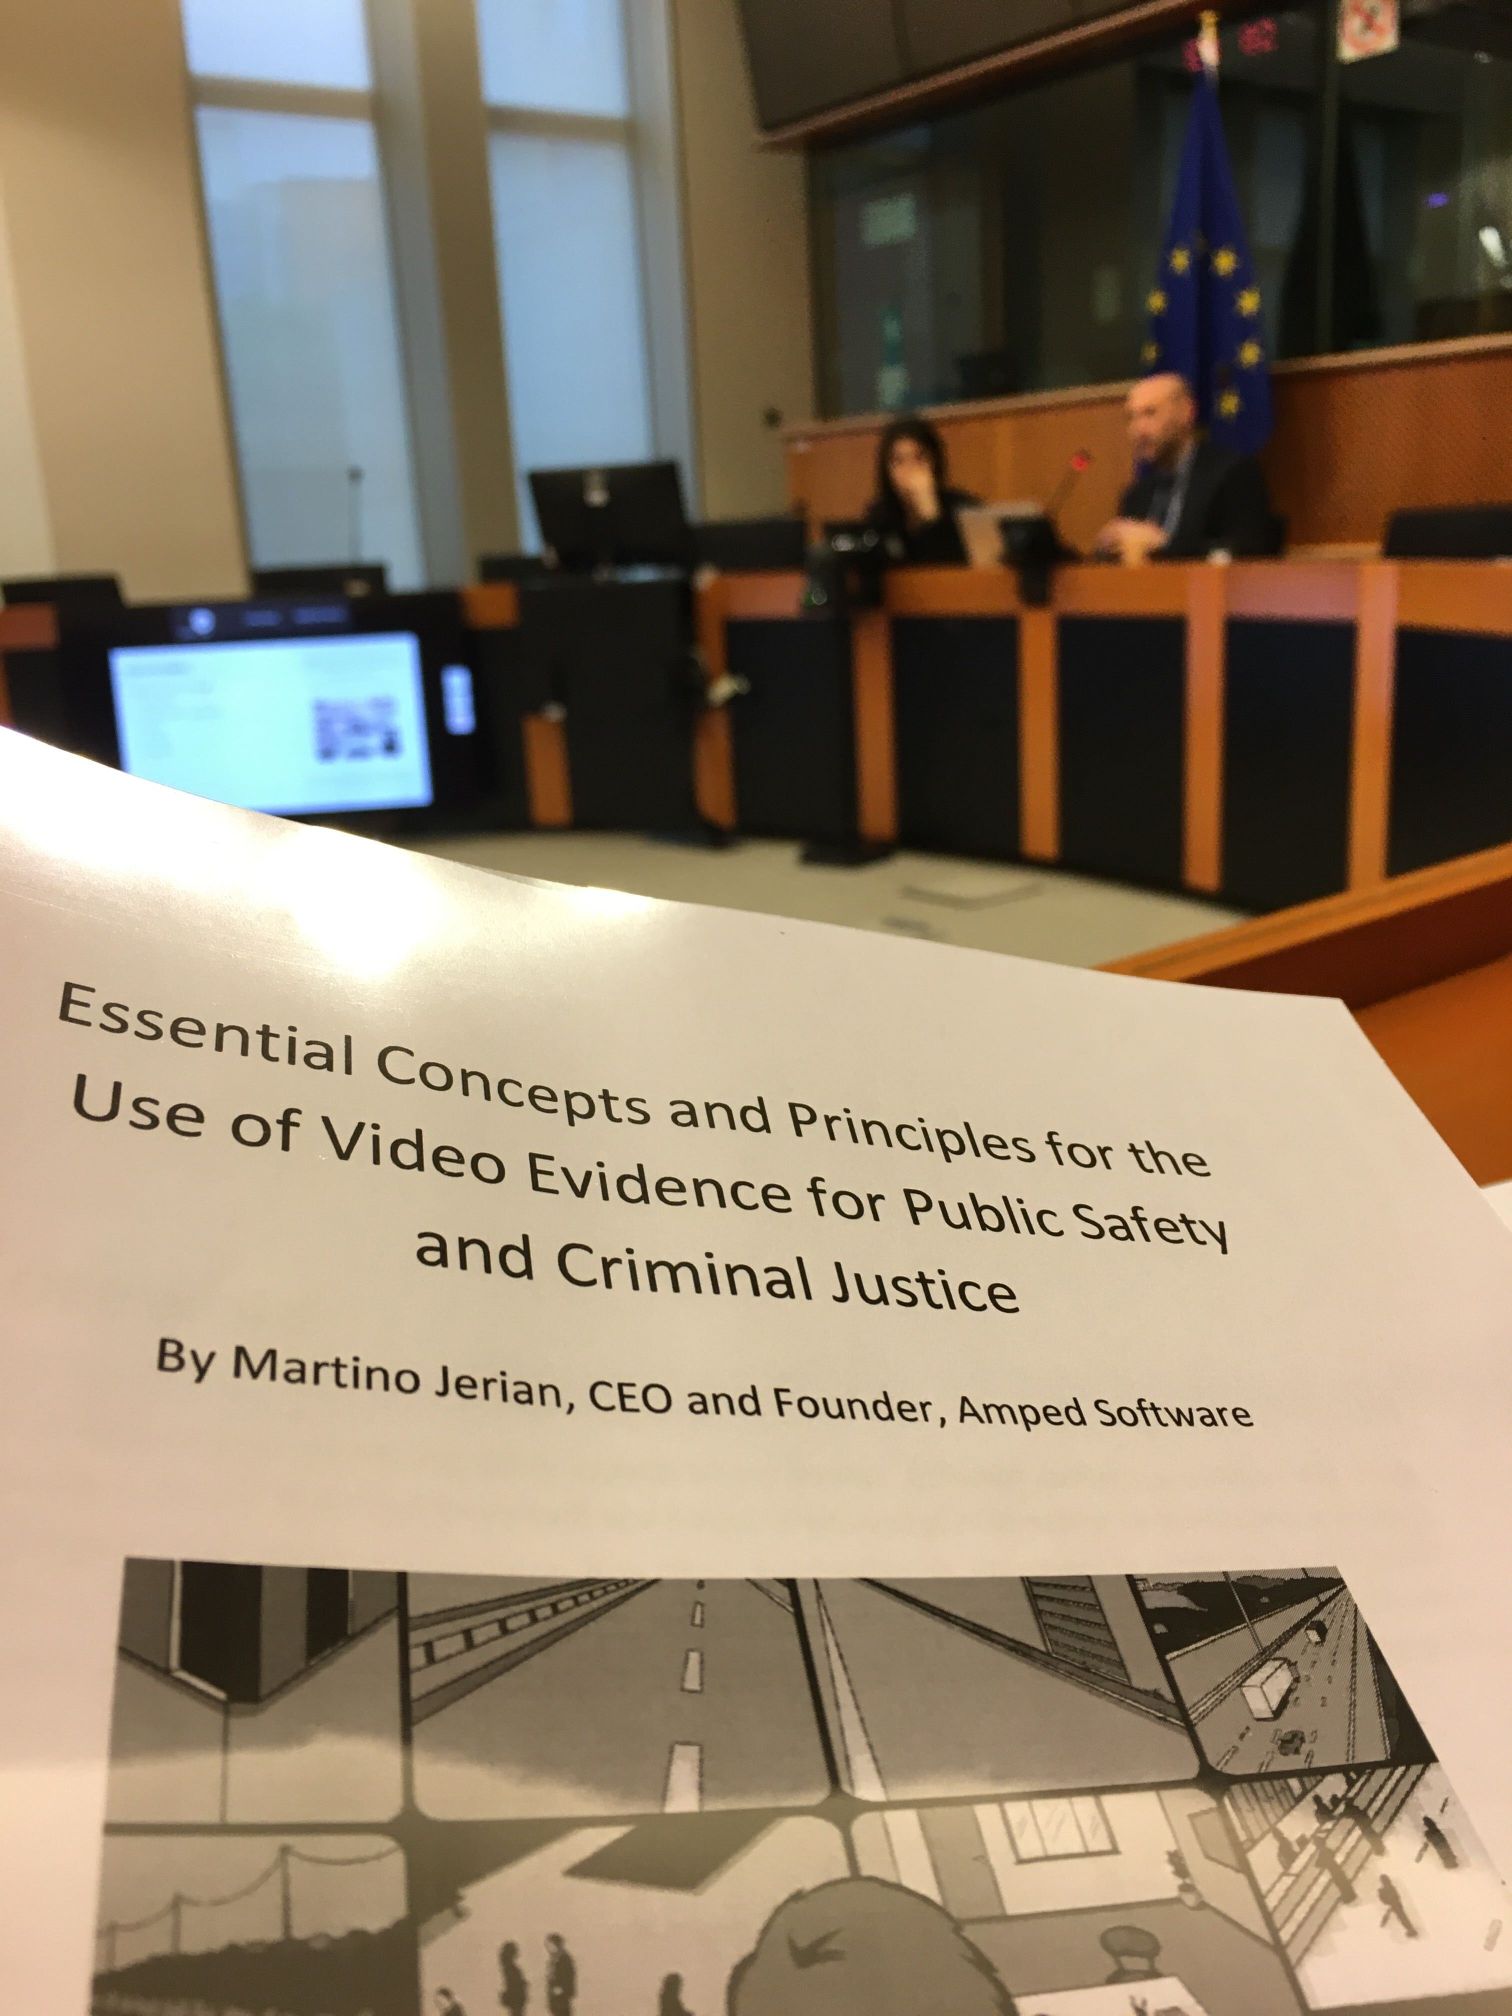 Video evidence principles